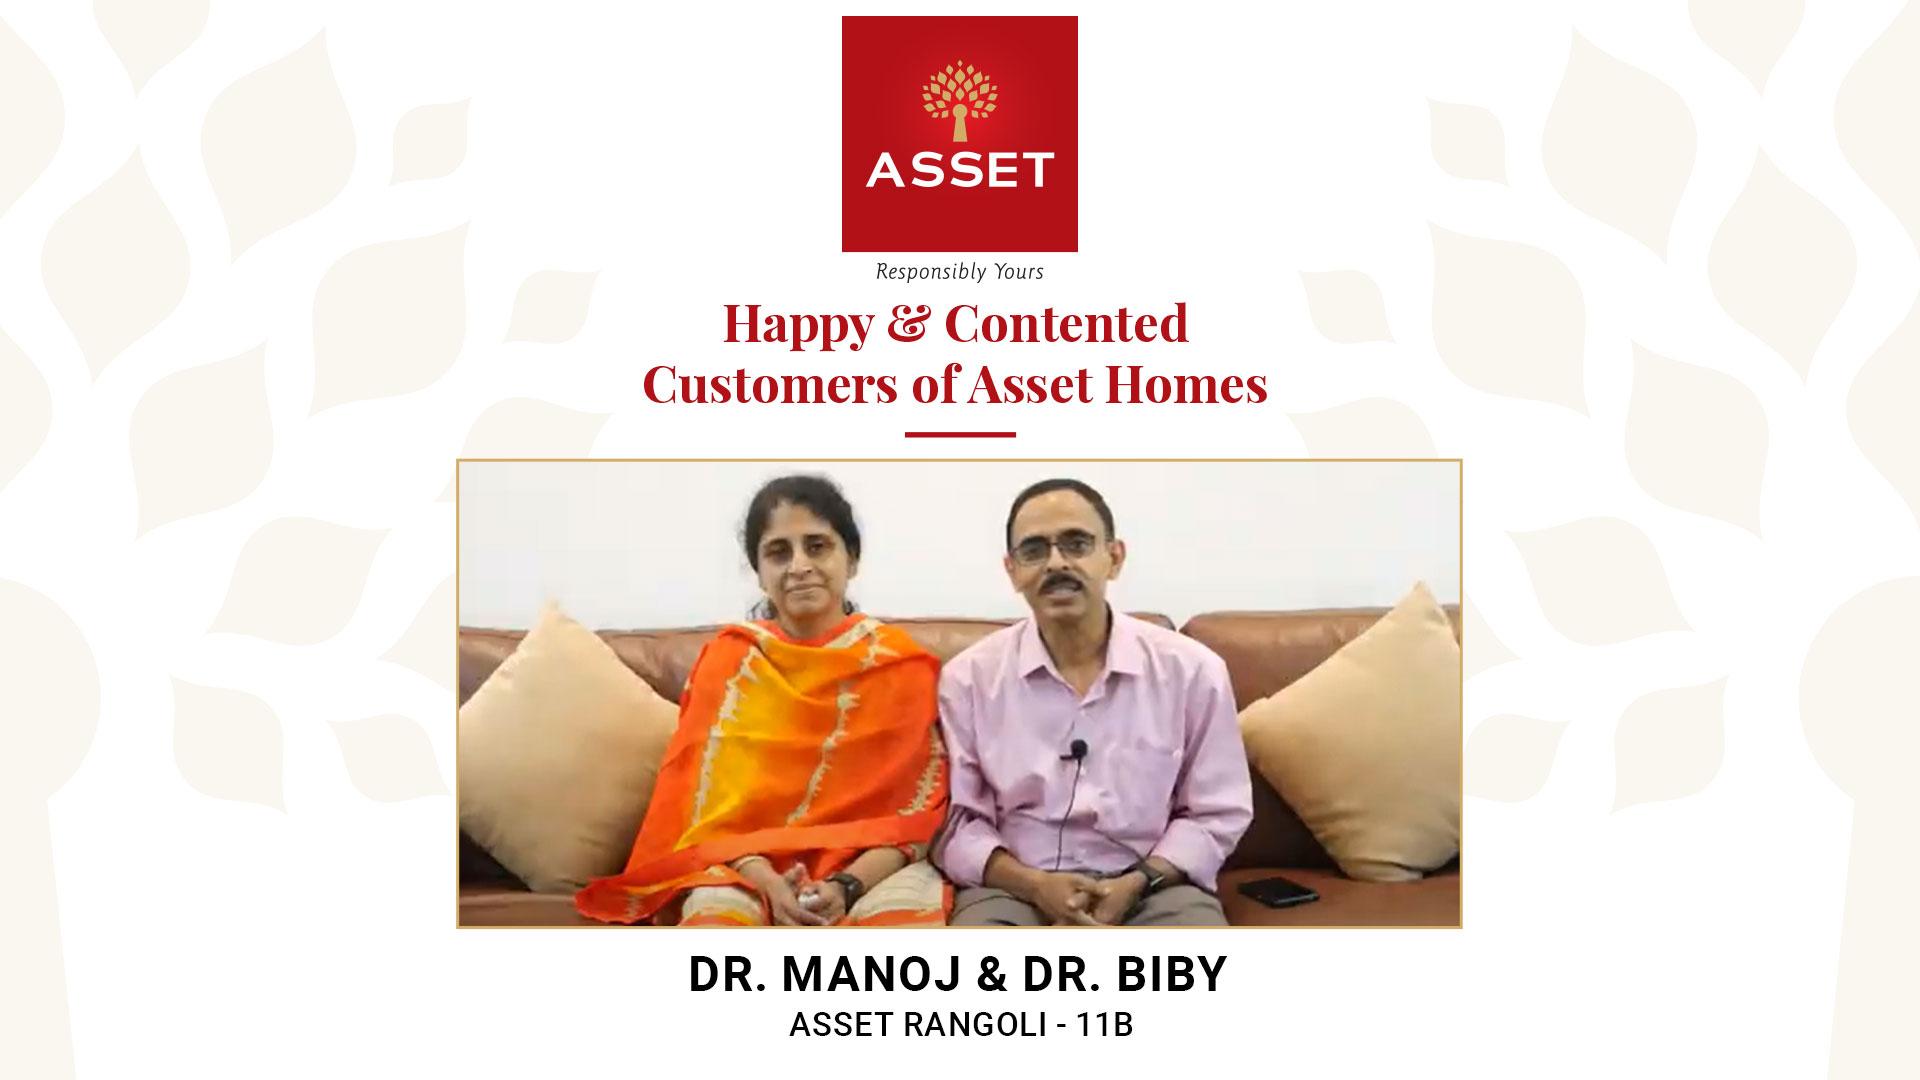 Dr. Manoj & Dr. Biby, Asset Rangoli – 11B